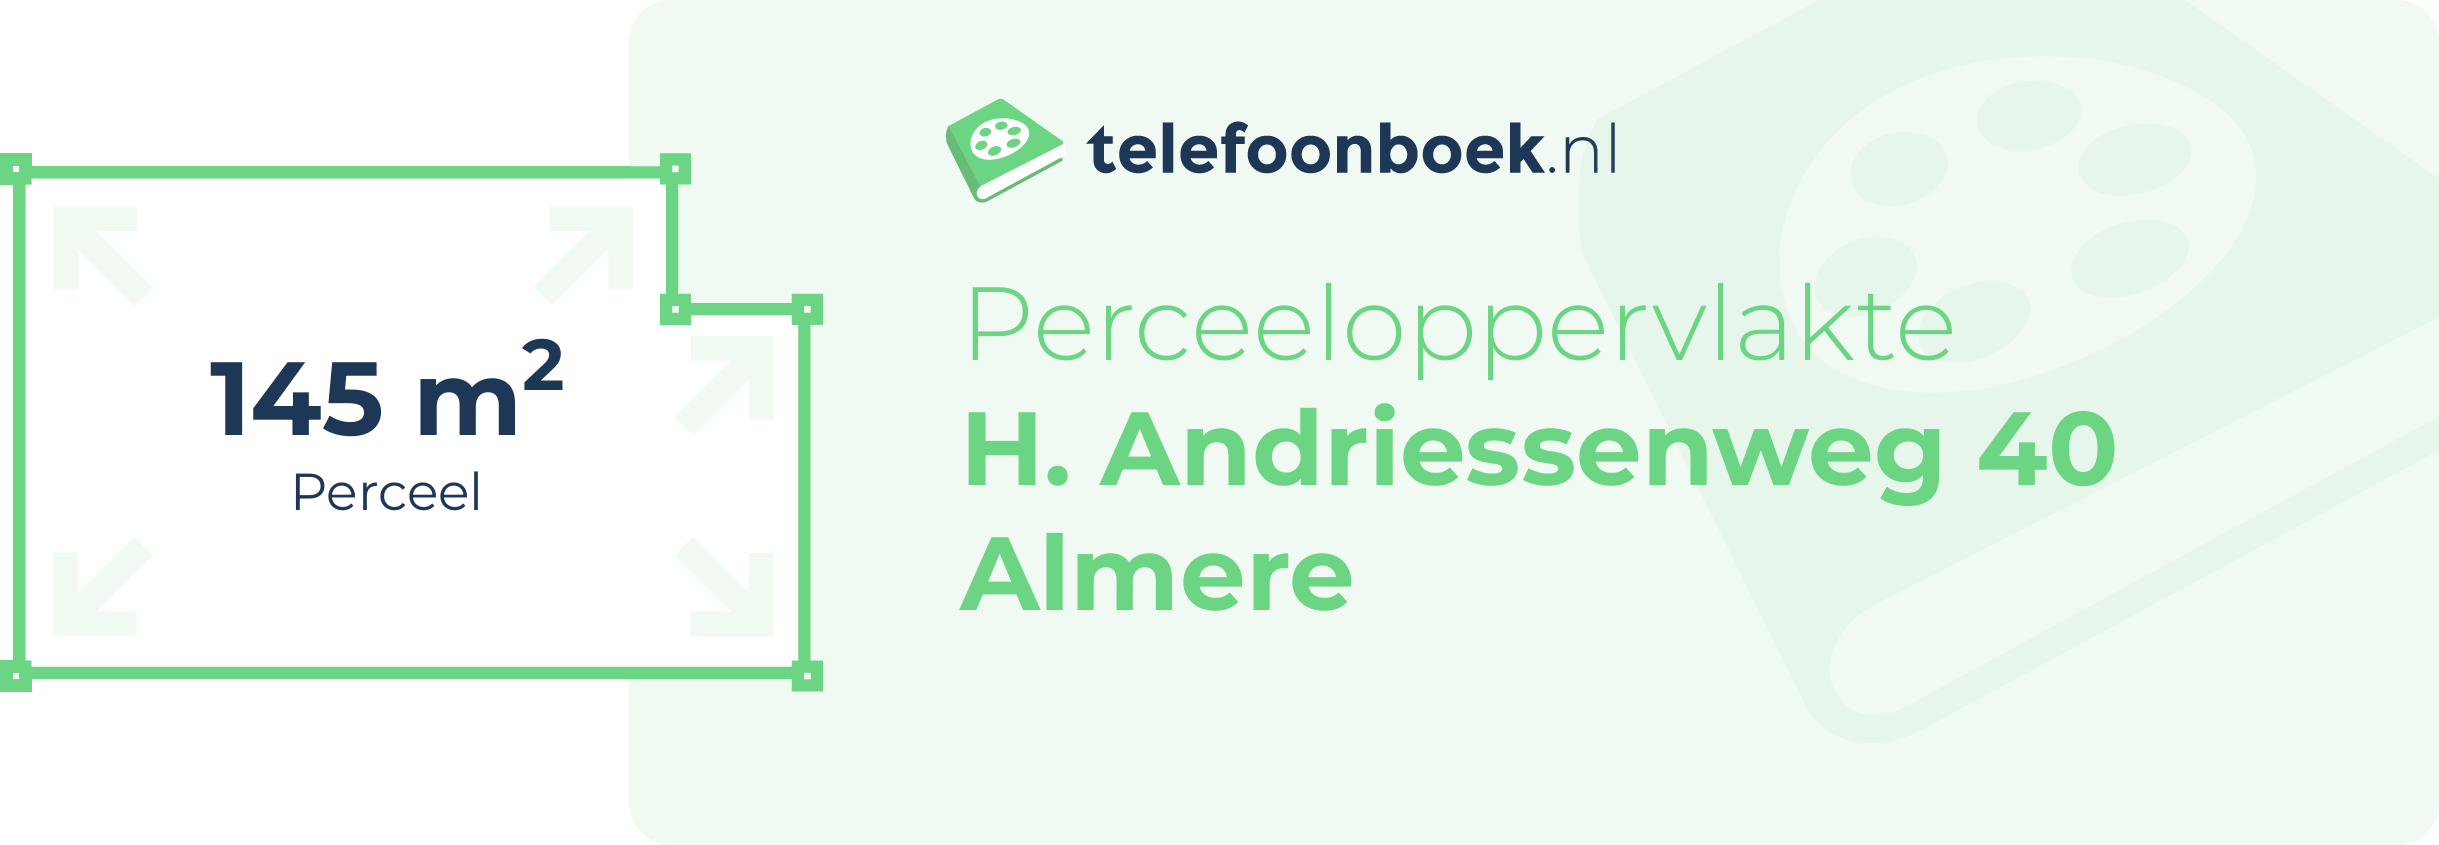 Perceeloppervlakte H. Andriessenweg 40 Almere